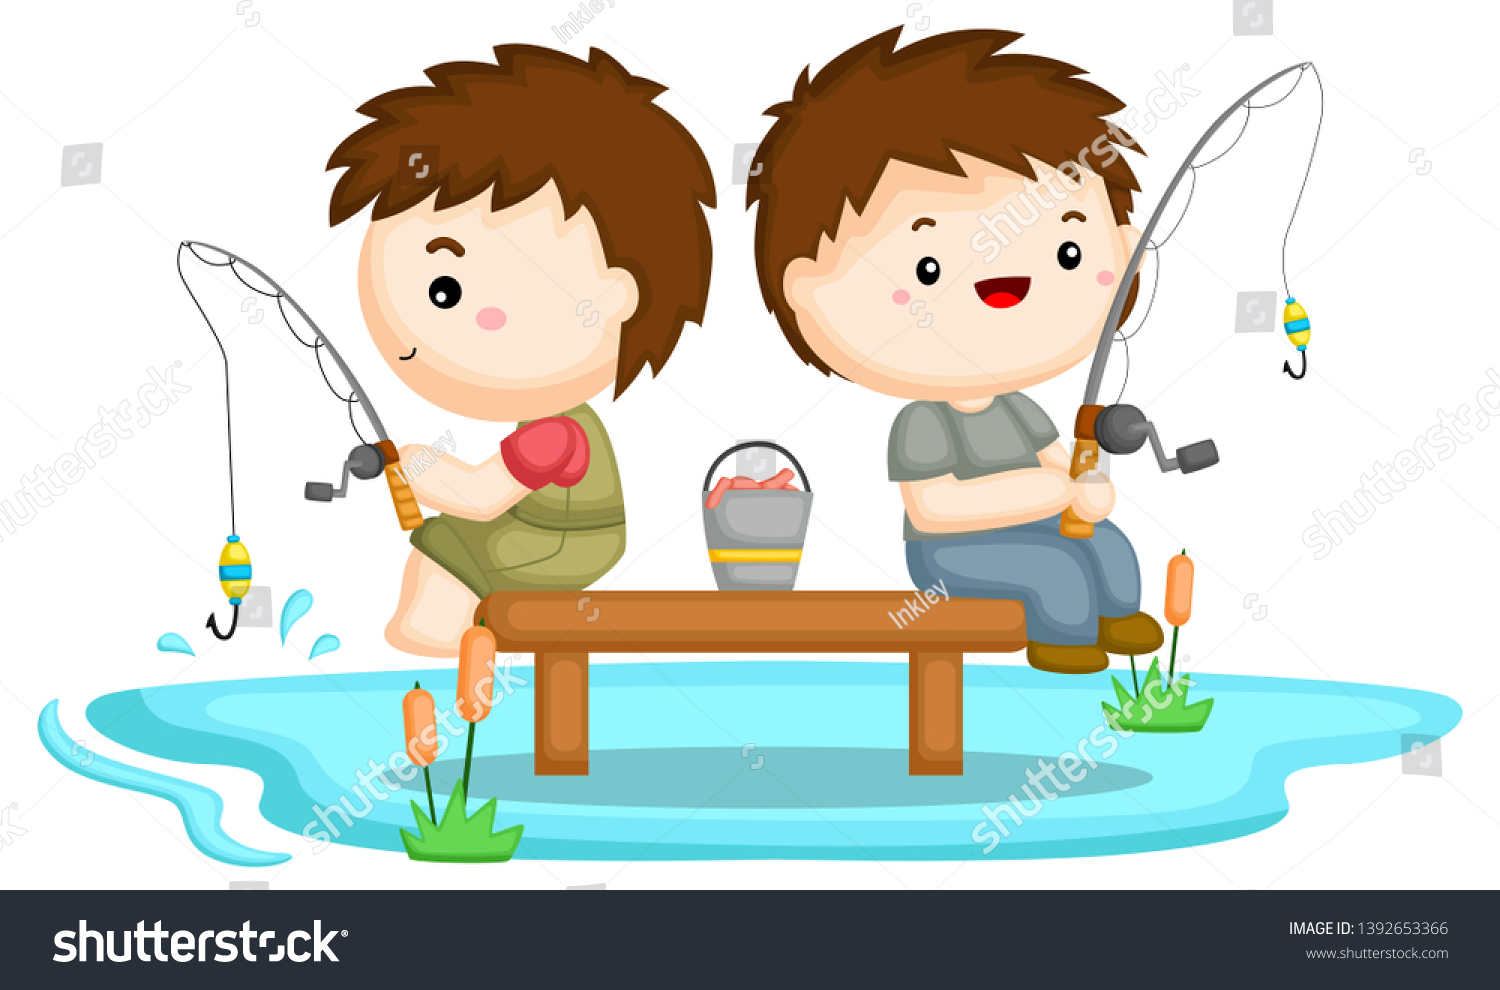 Иллюстрация два мальчика рыбачат